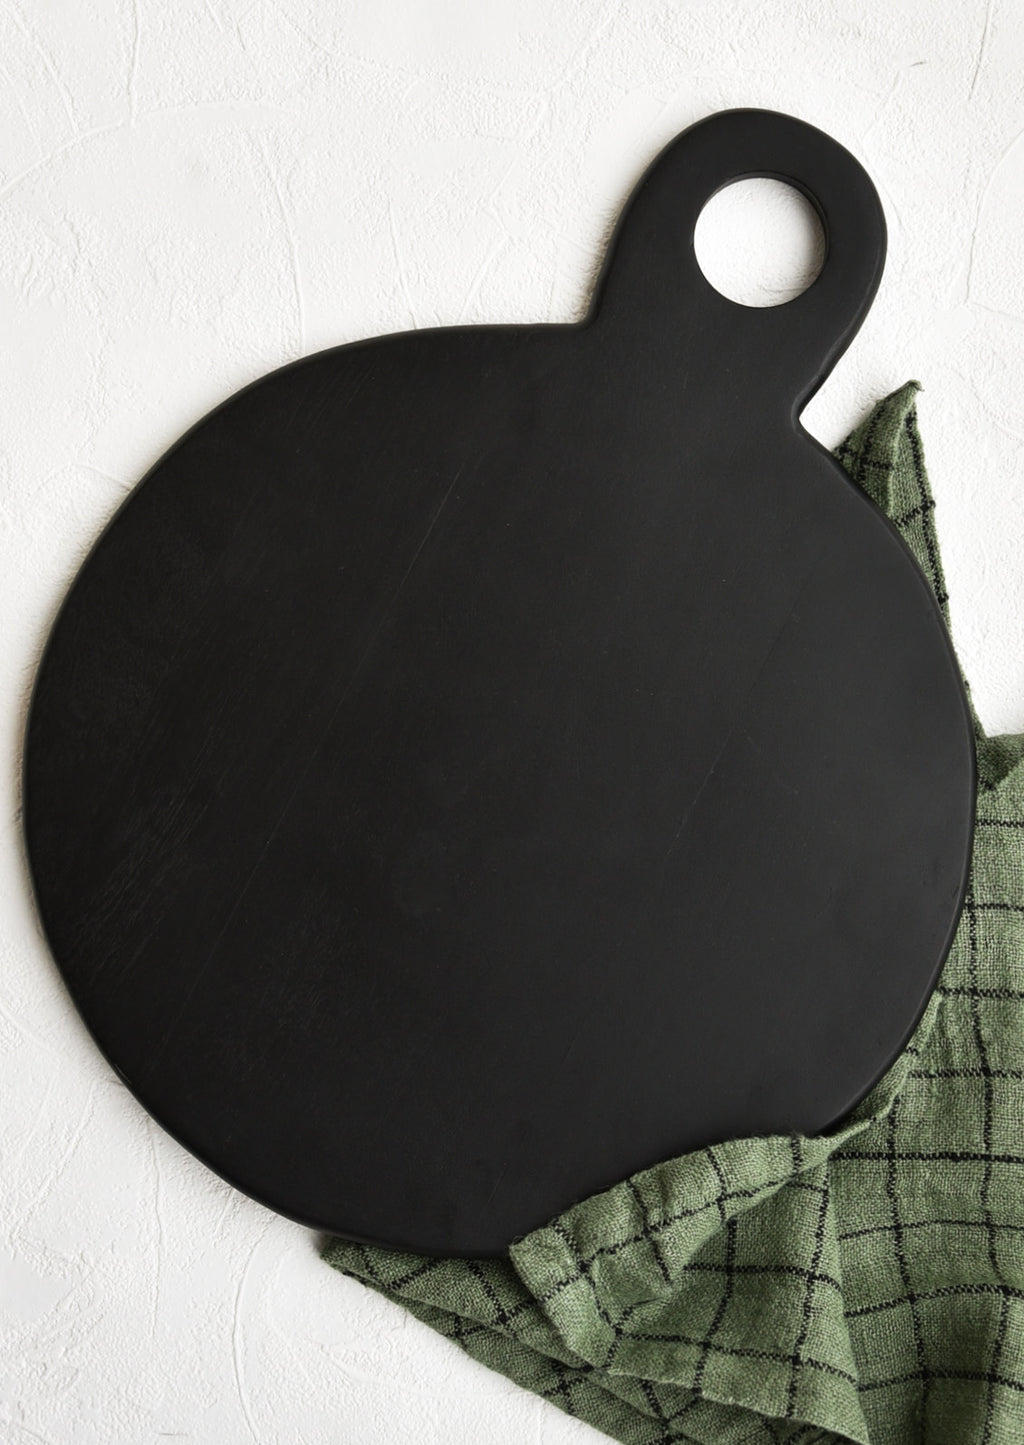 Round: A wide, round cutting board in black.